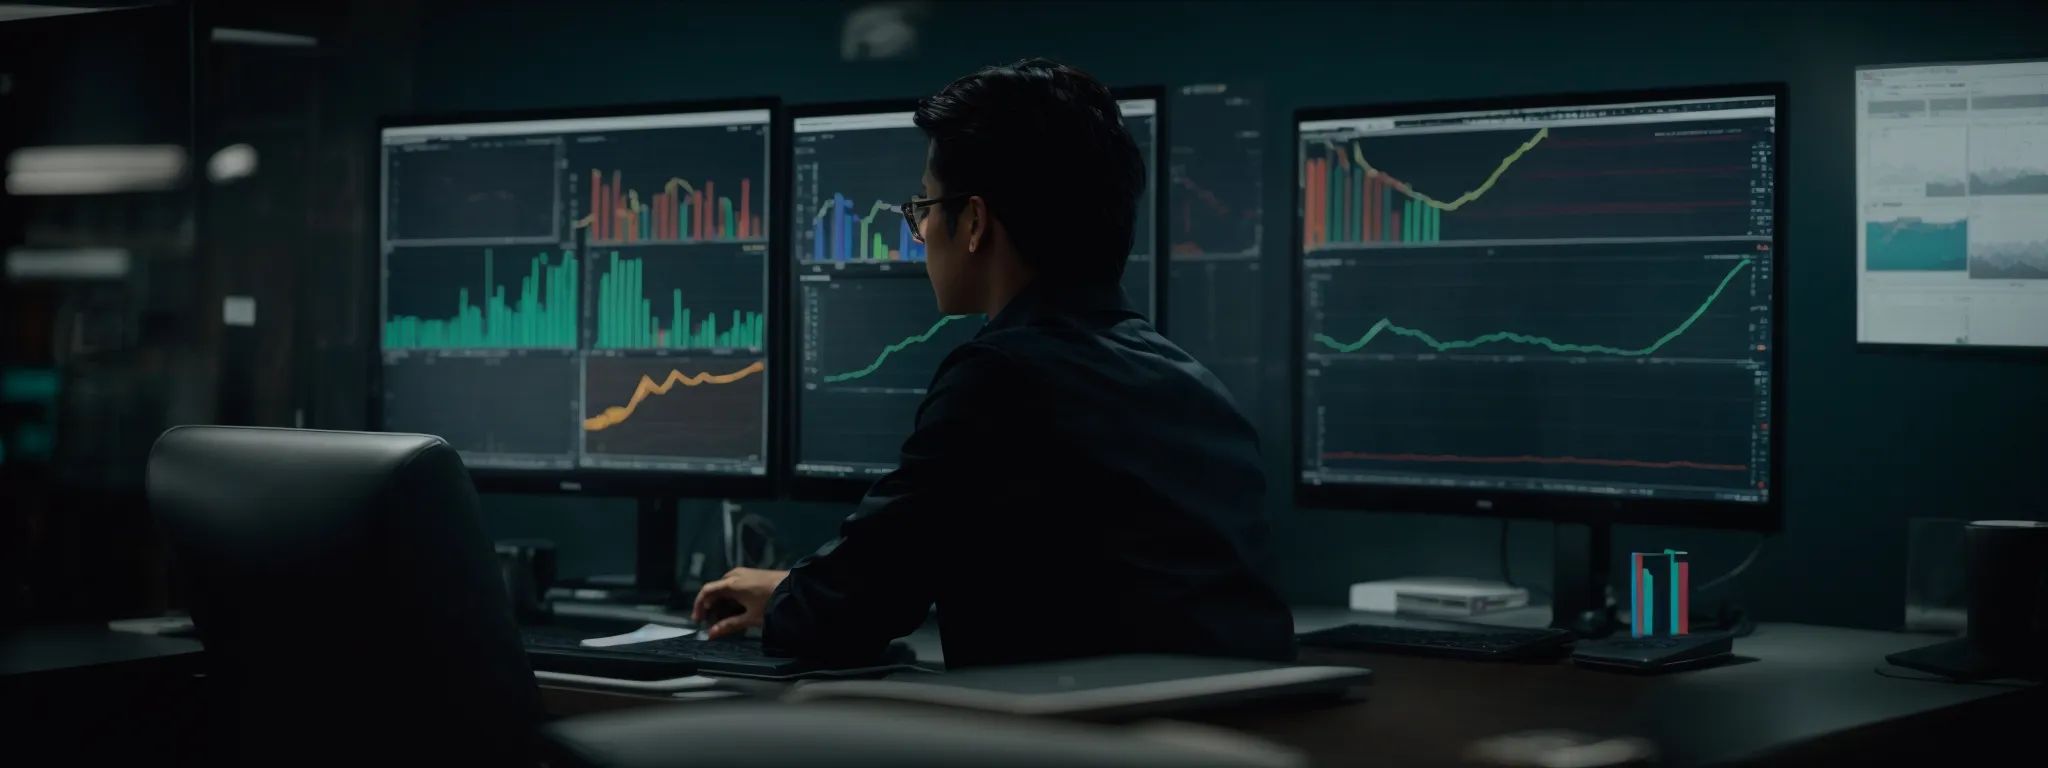 a professional peering at a sleek, modern computer monitor displaying colorful analytics charts.